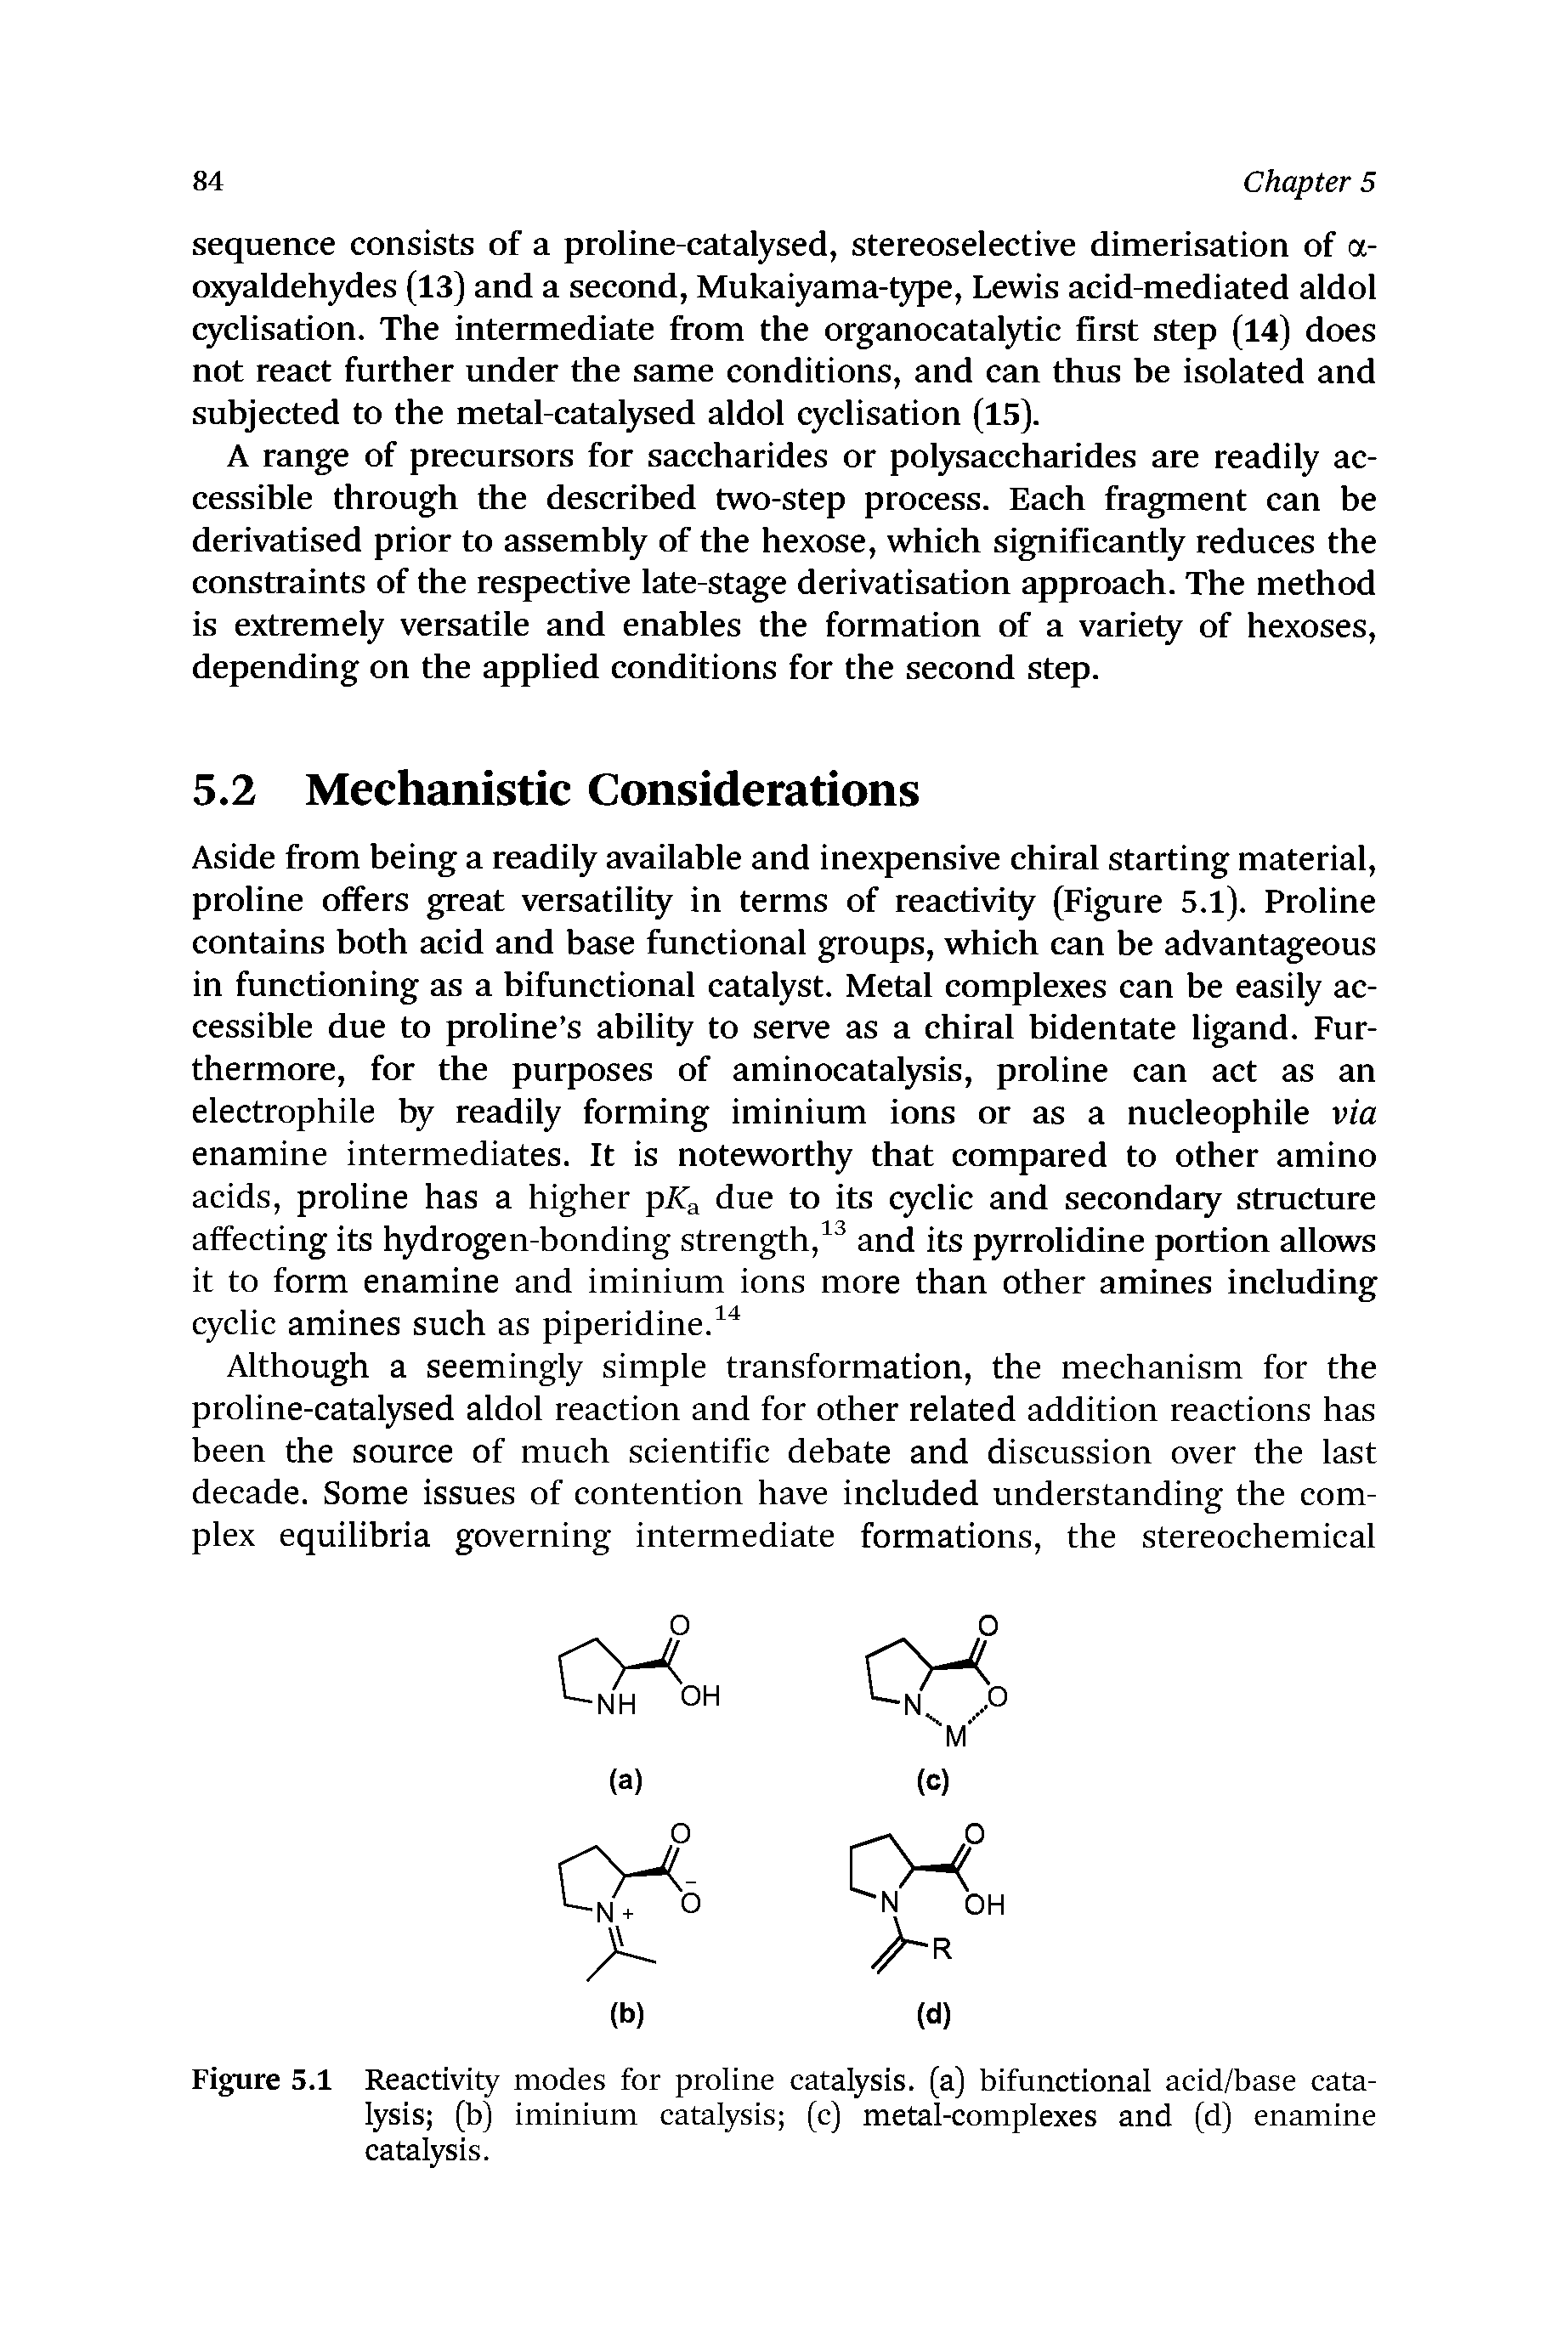 Figure 5.1 Reactivity modes for proline eatalysis. (a) bifunctional acid/base catalysis (b) iminium catalysis (c) metal-complexes and (d) enamine catalysis.